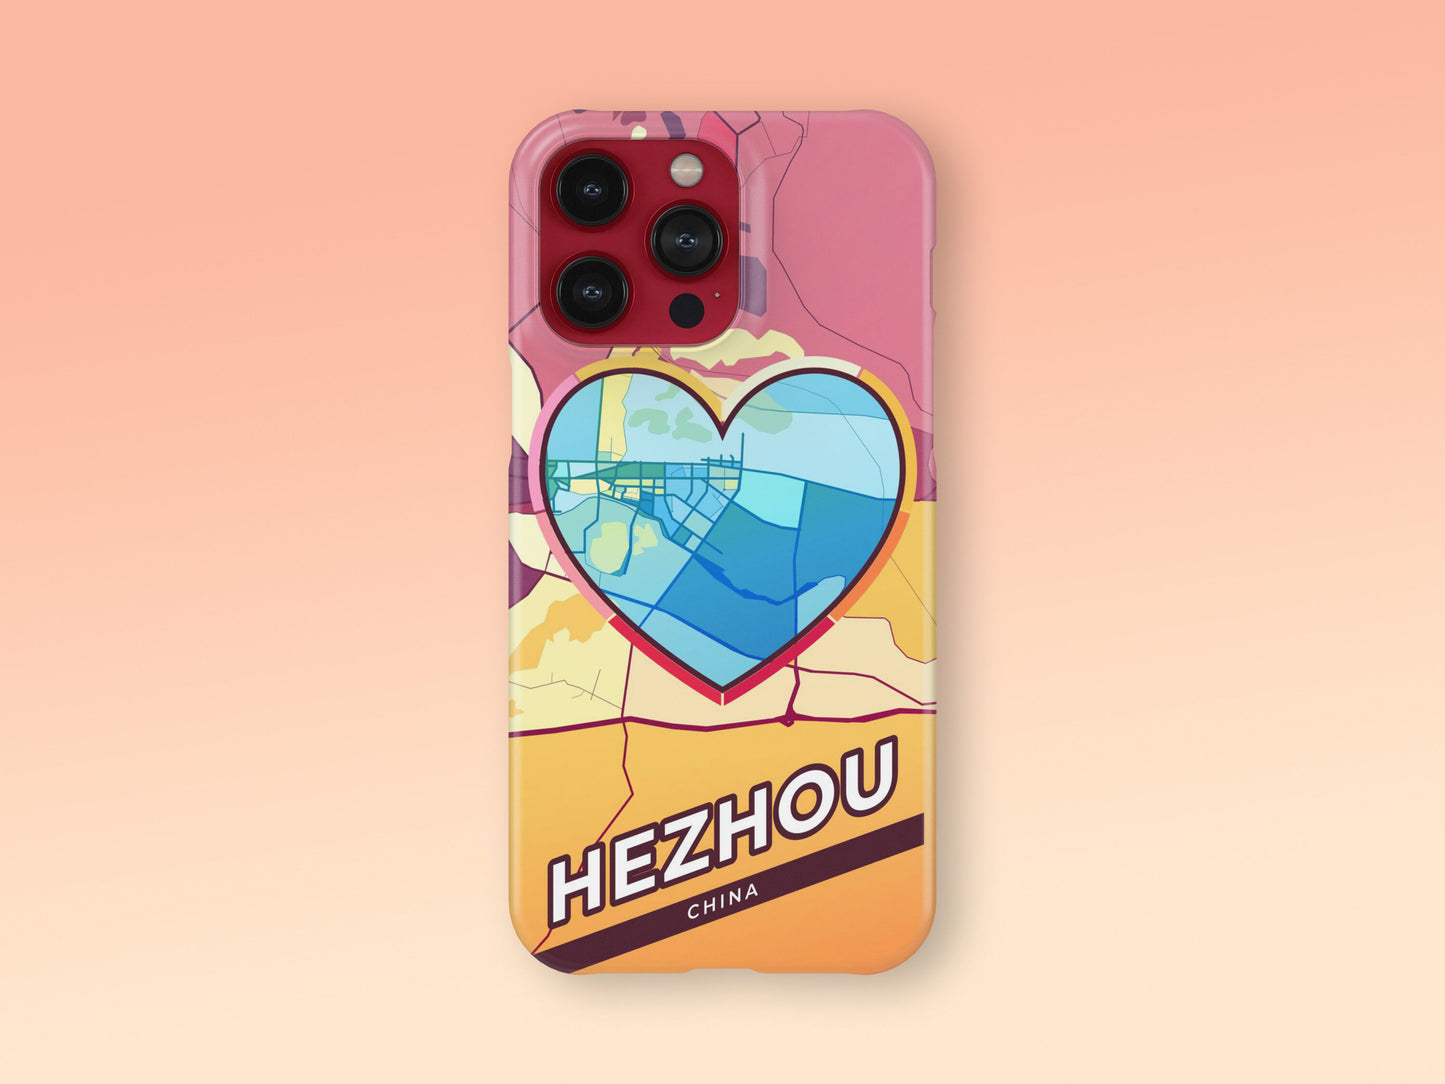 Hezhou China slim phone case with colorful icon. Birthday, wedding or housewarming gift. Couple match cases. 2